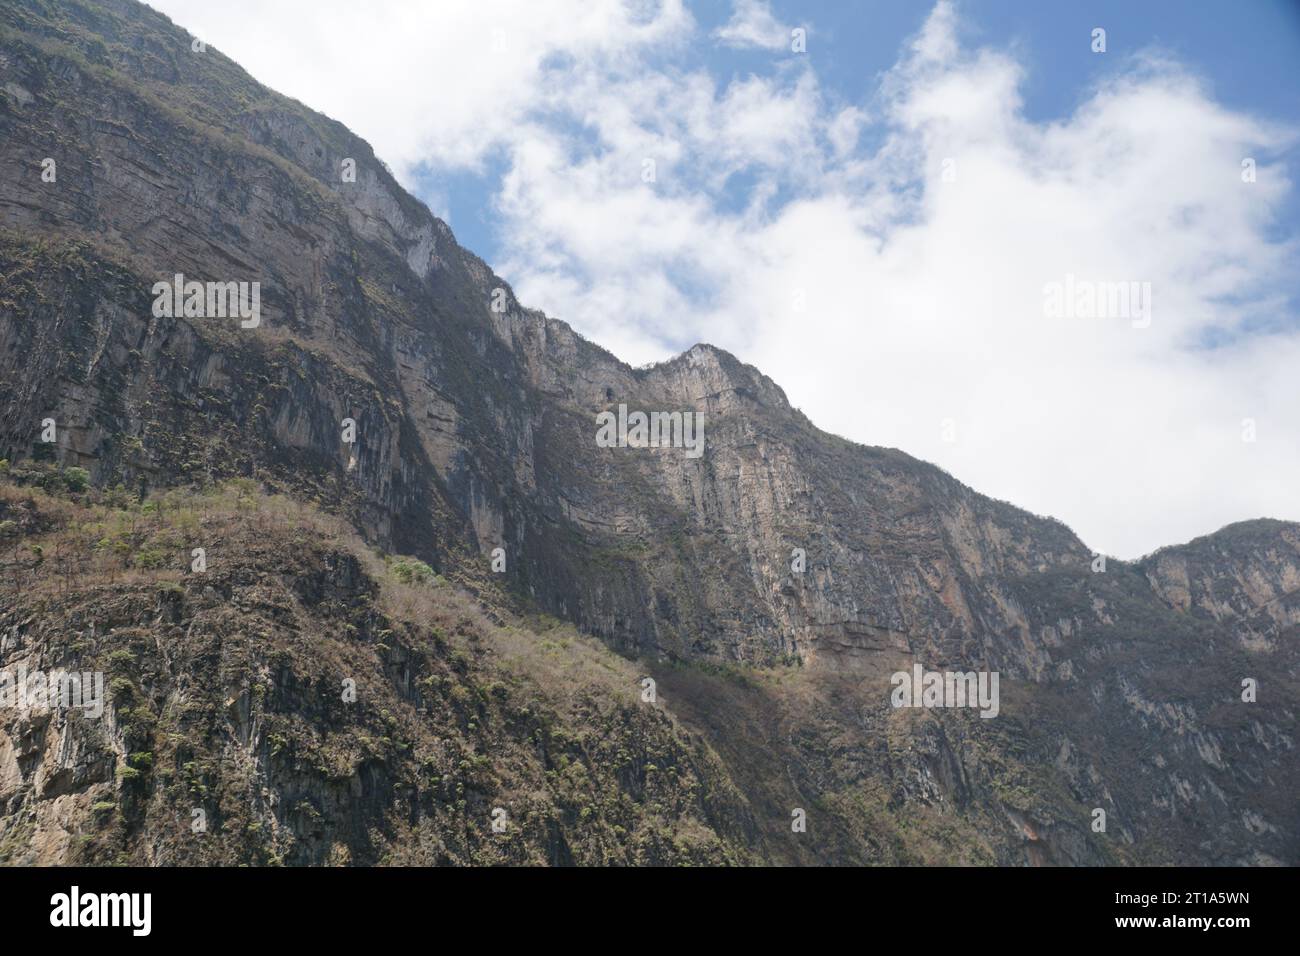 Klippe, Berg, sumidero Canyon, Wolken, Himmel, Vegetation in chiapas, mexiko Stockfoto